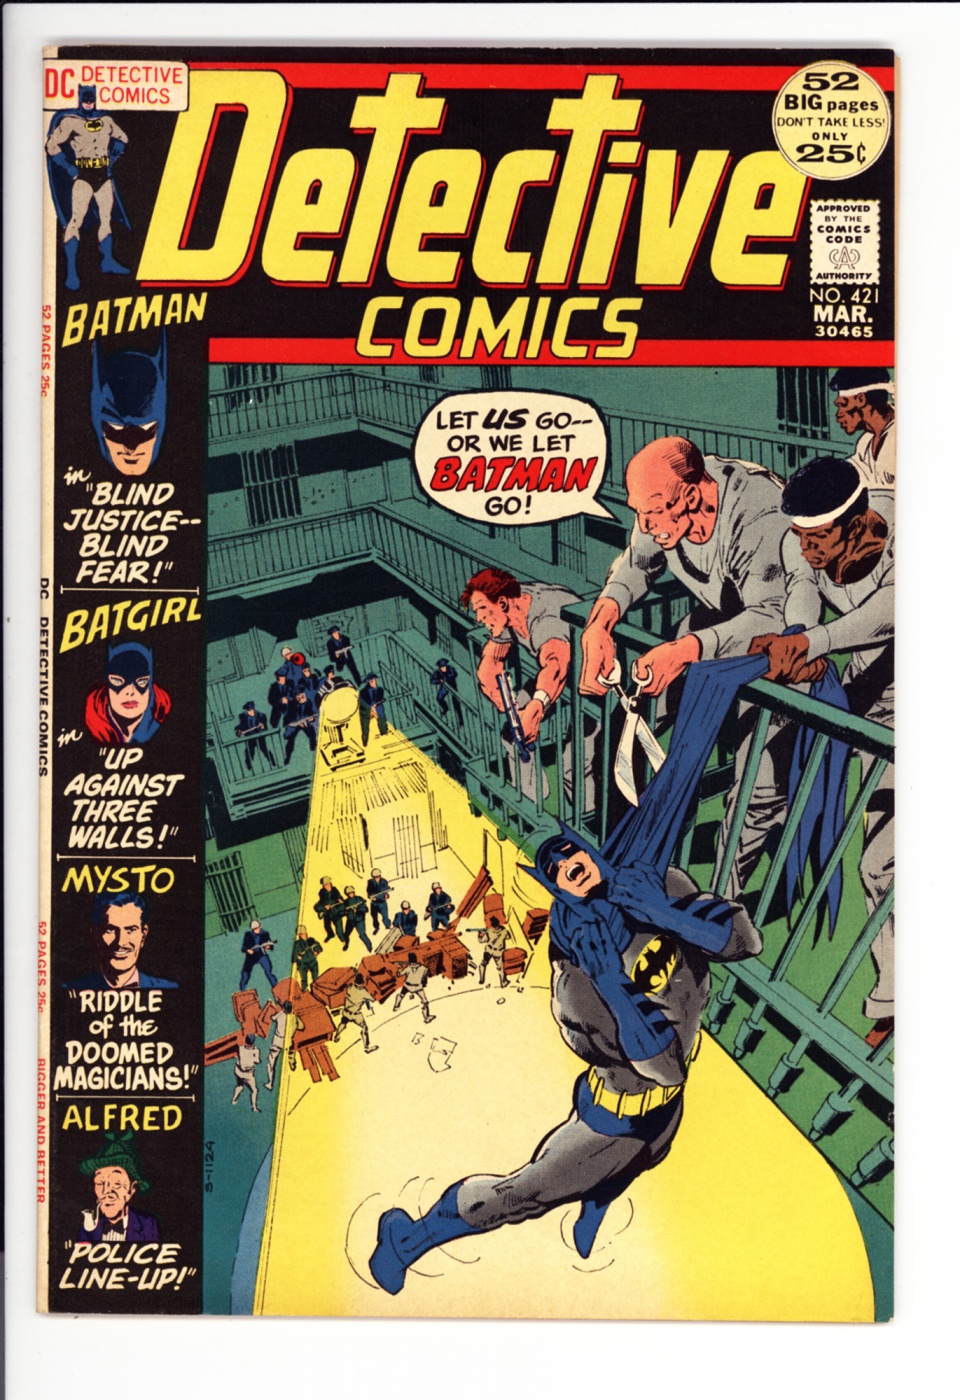 #873 NM 1937 Series 9.2 Detective Comics